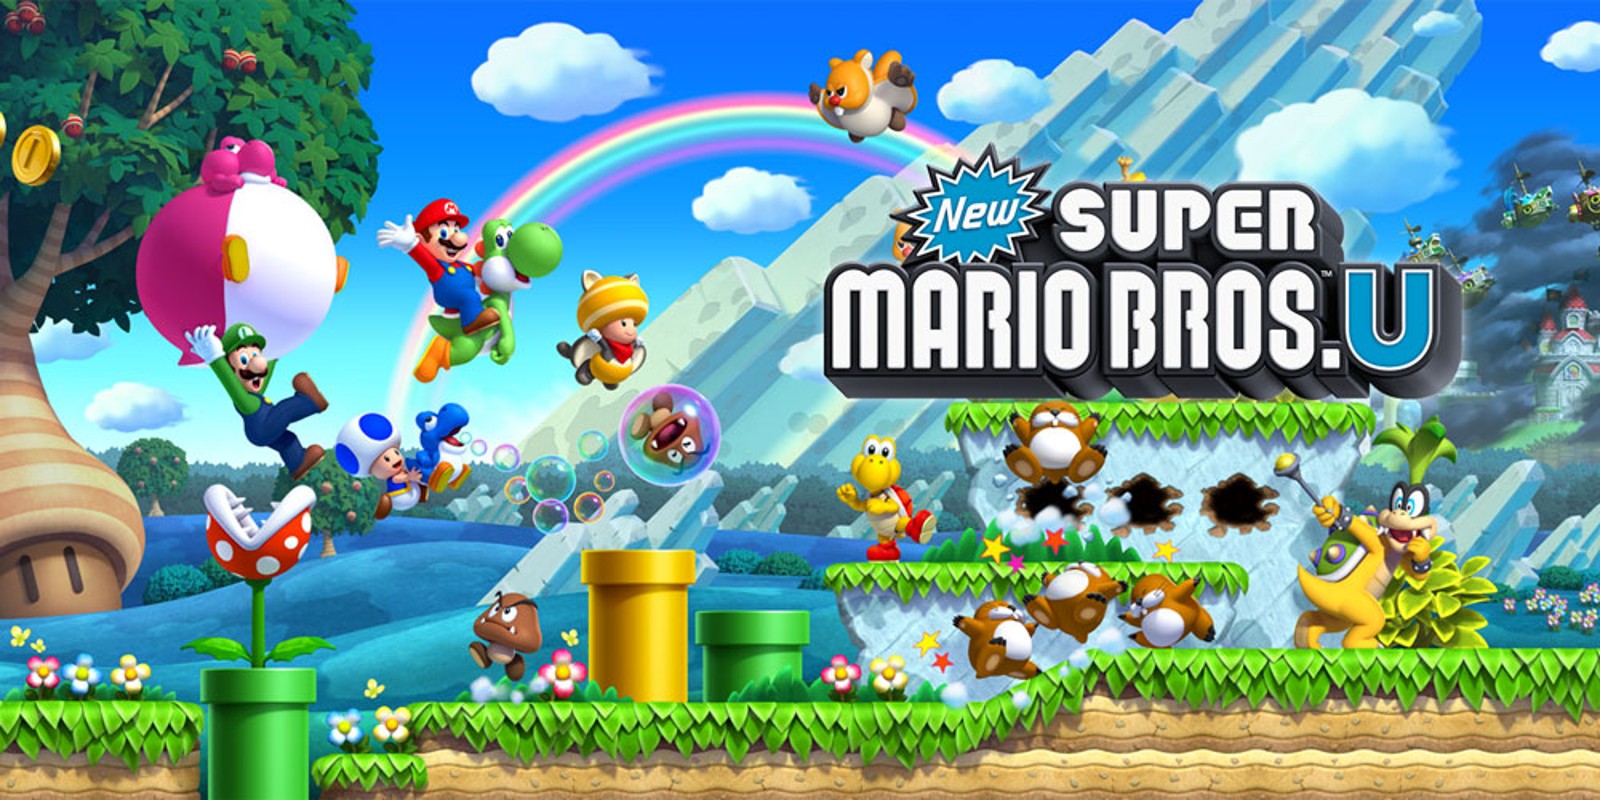 Gronden Hubert Hudson Plenaire sessie New Super Mario Bros. U + New Super Luigi U | Wii U games | Games | Nintendo